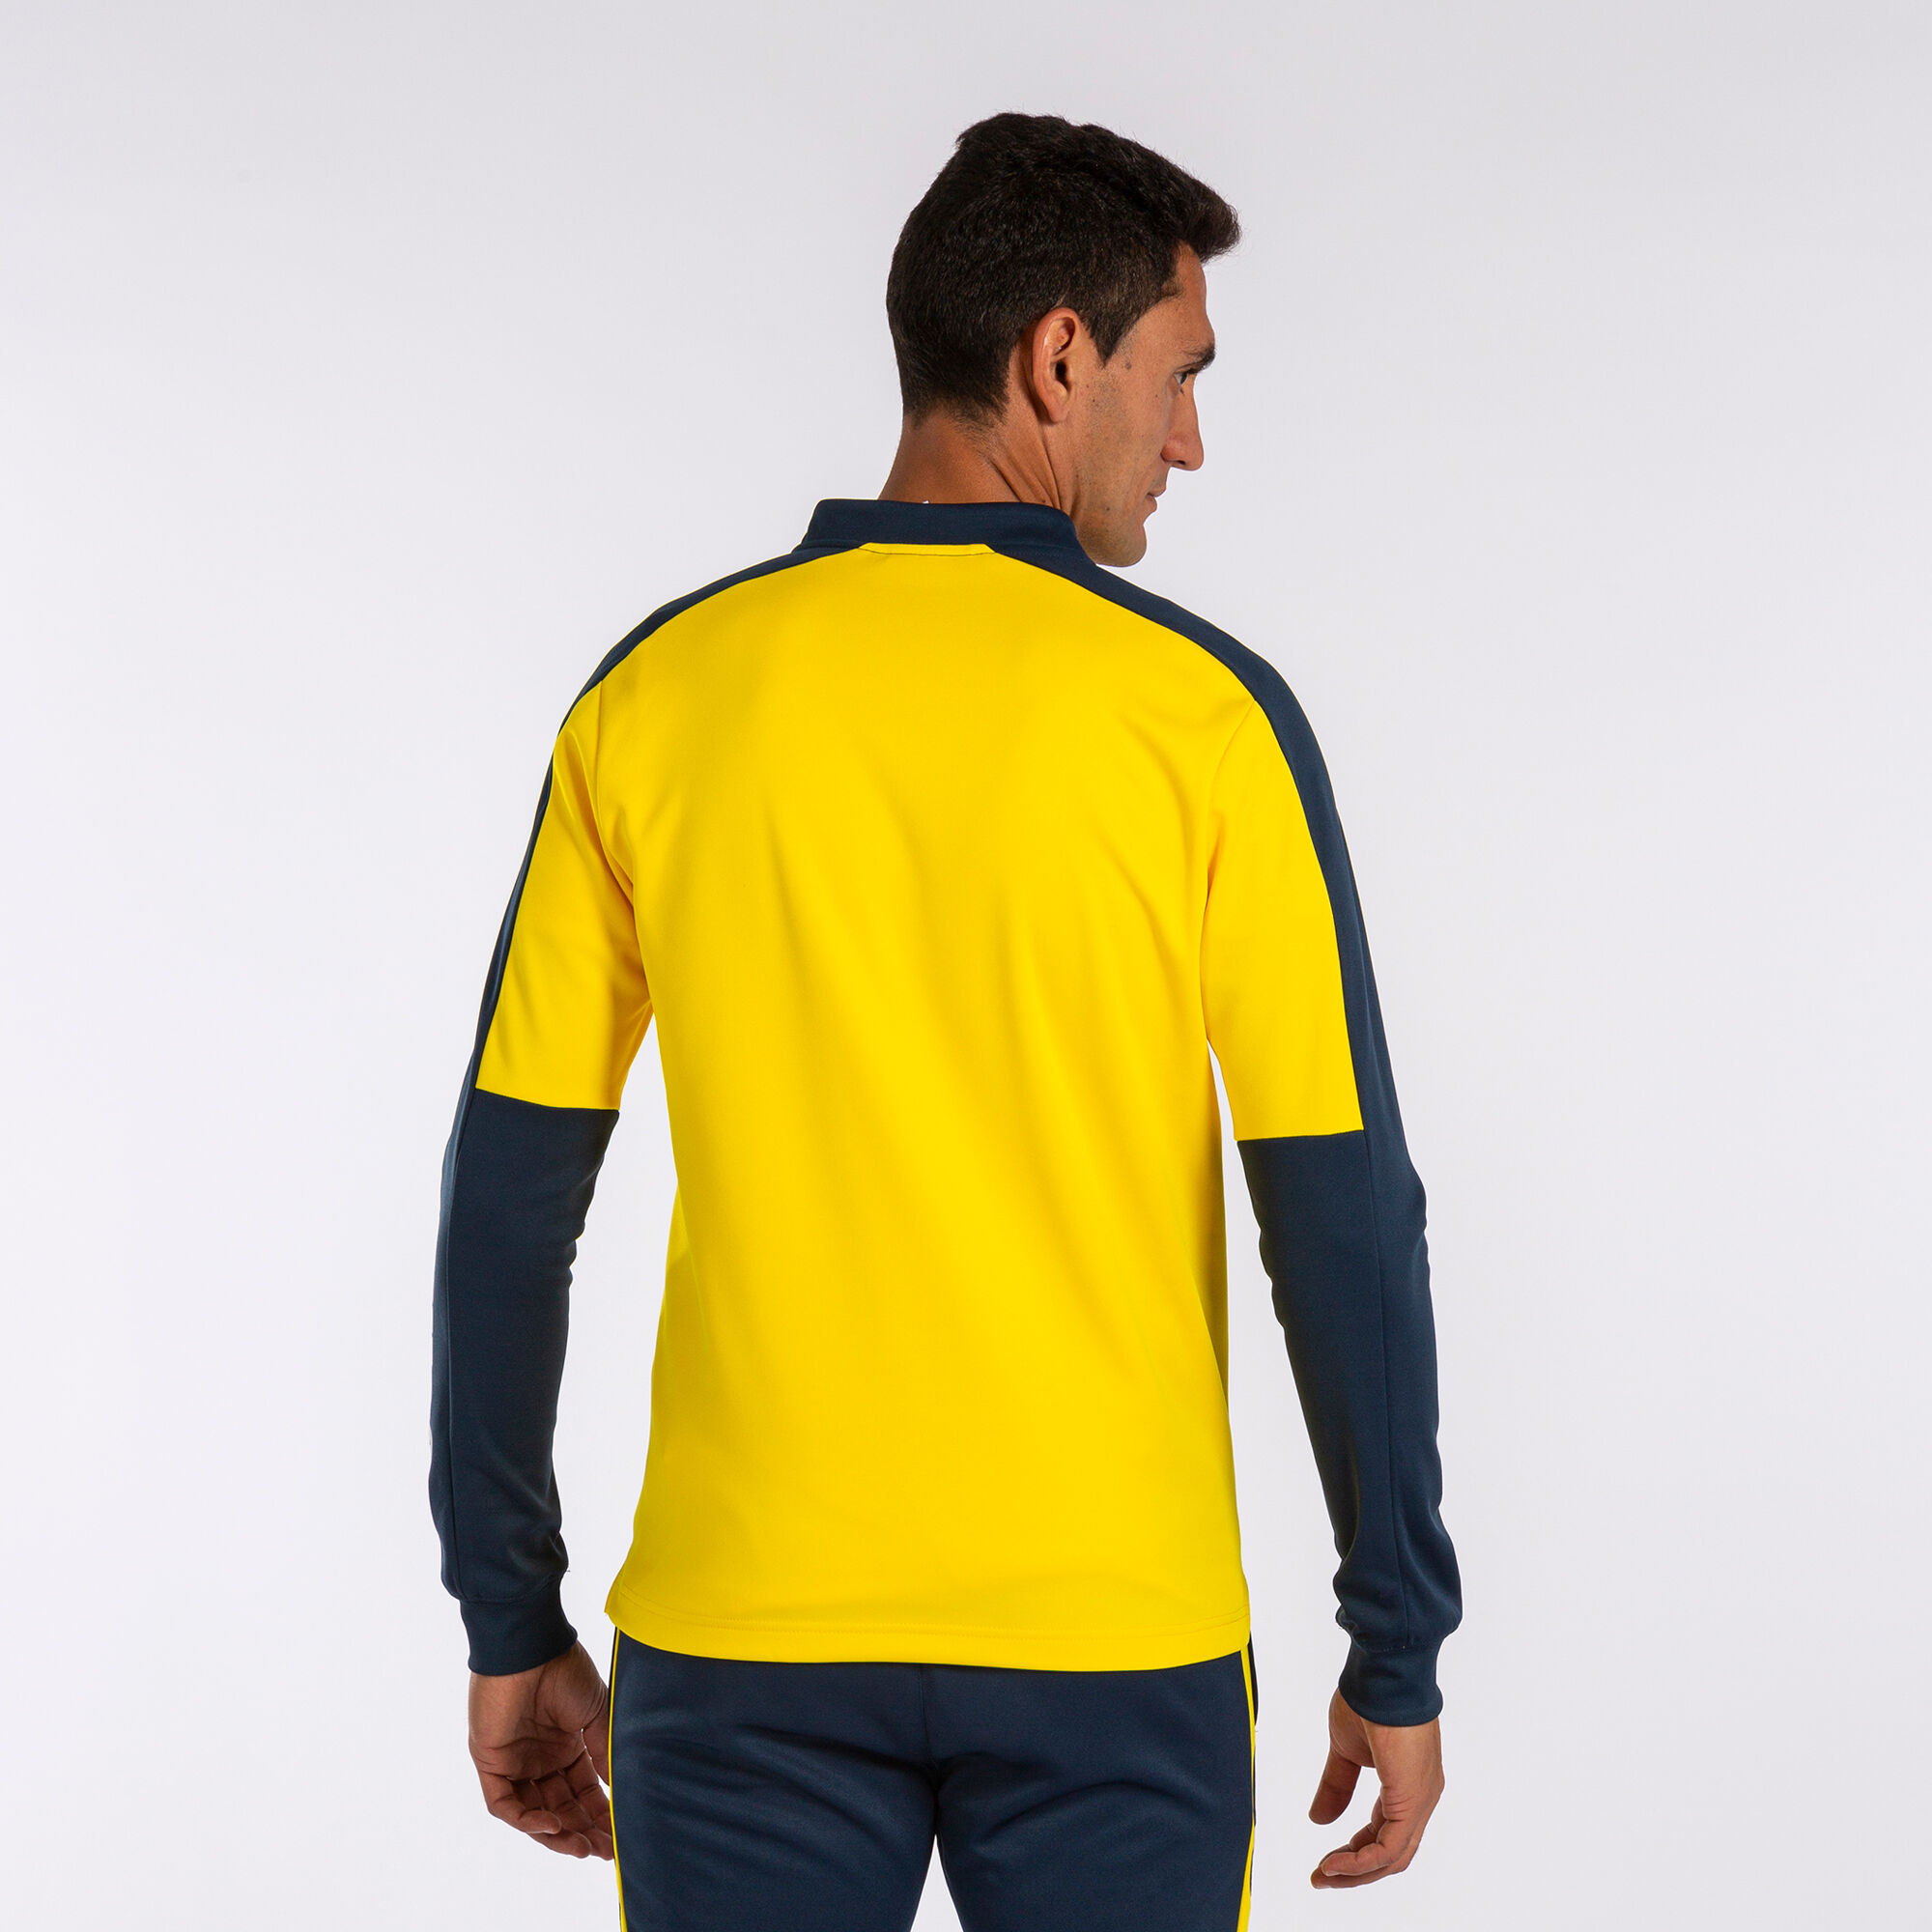 Sweat-shirt homme Eco Championship jaune bleu marine